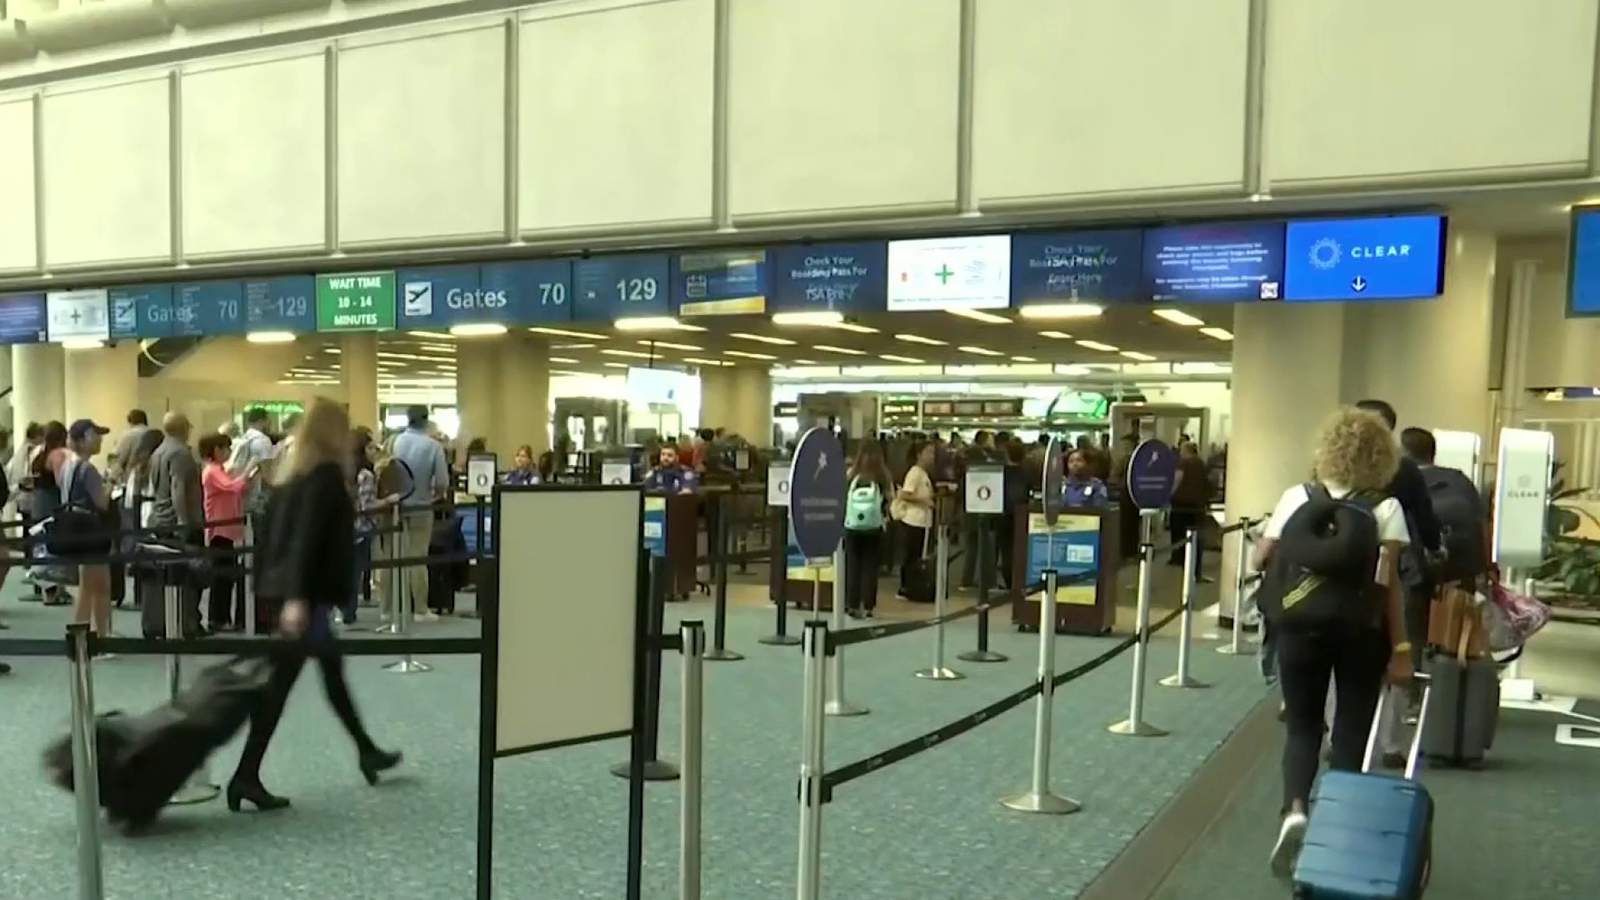 Missing 15-year-old found at Orlando airport went through TSA precheck, police say